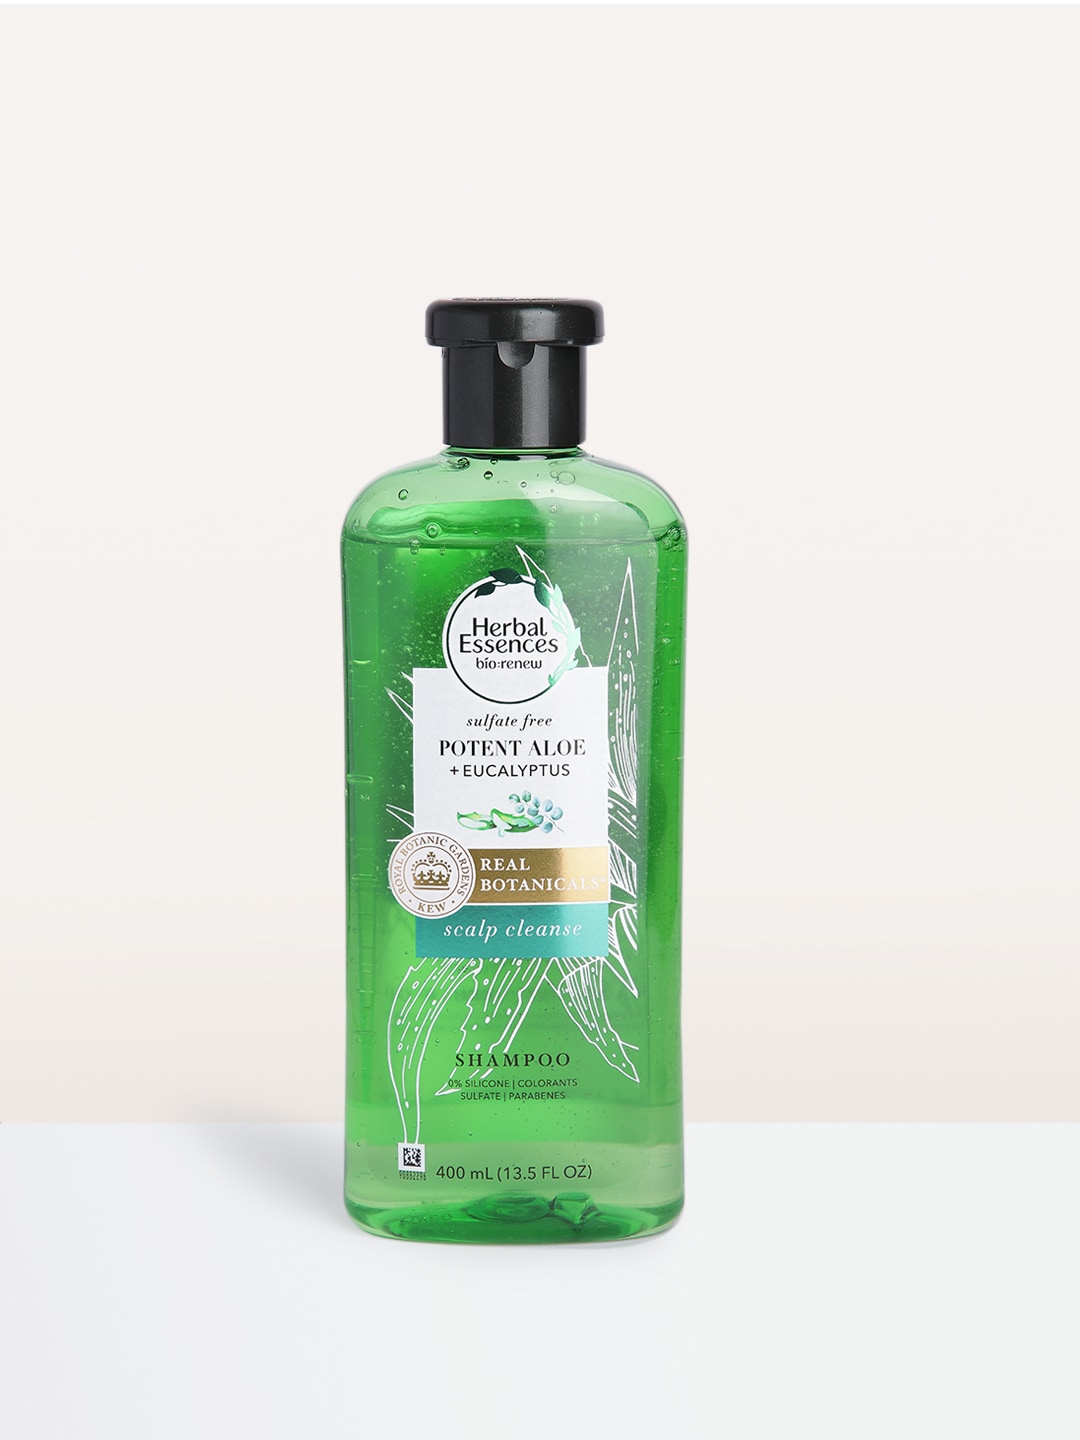 Herbal Essences Bio-Renew Potent Aloe & Eucalyptus Scalp Cleanse Shampoo 400 ml Price in India